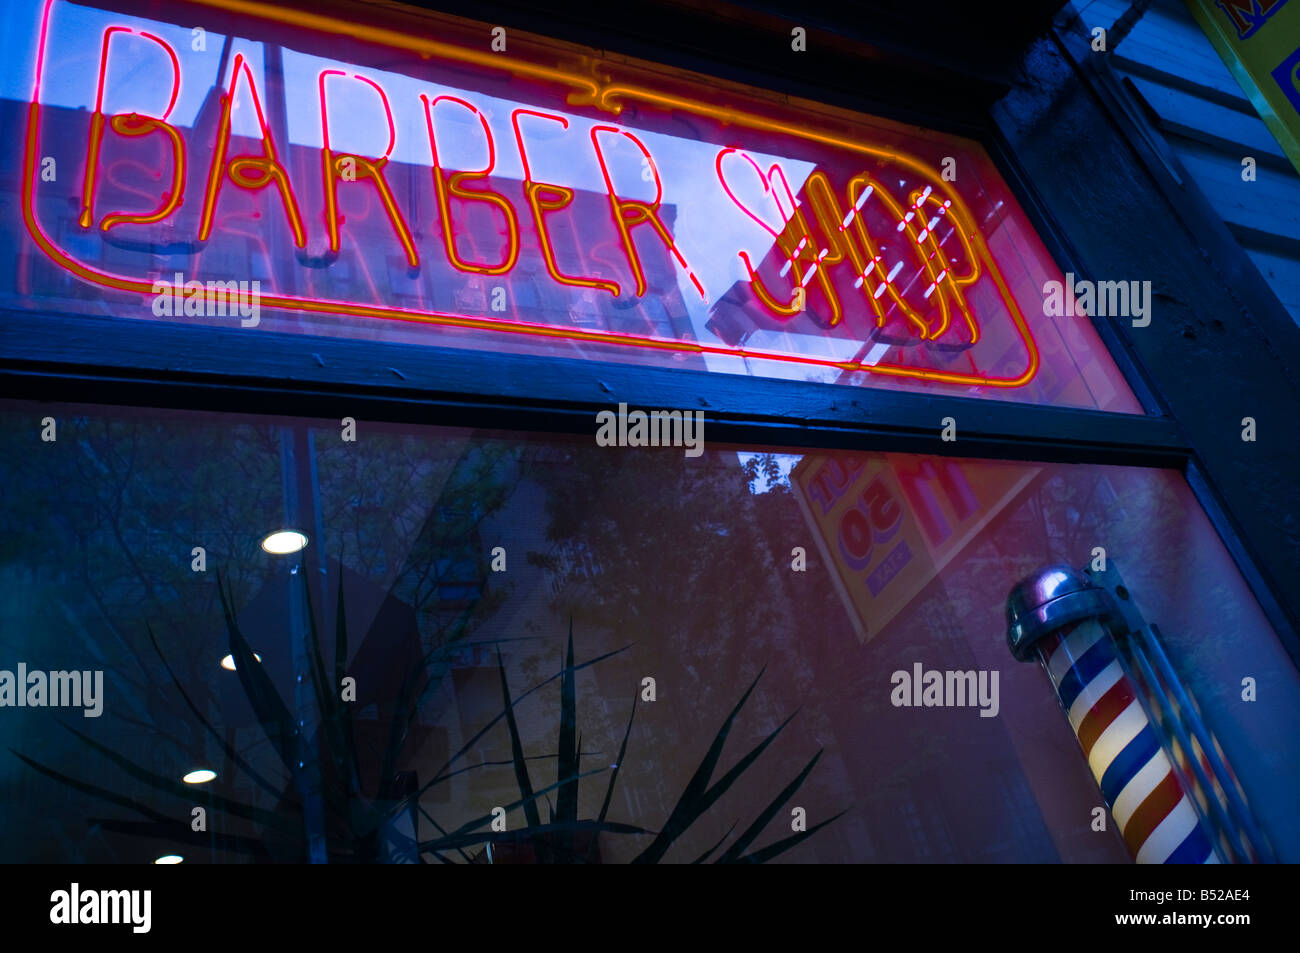 Barber Shop Leuchtreklame im Fenster Stockfoto